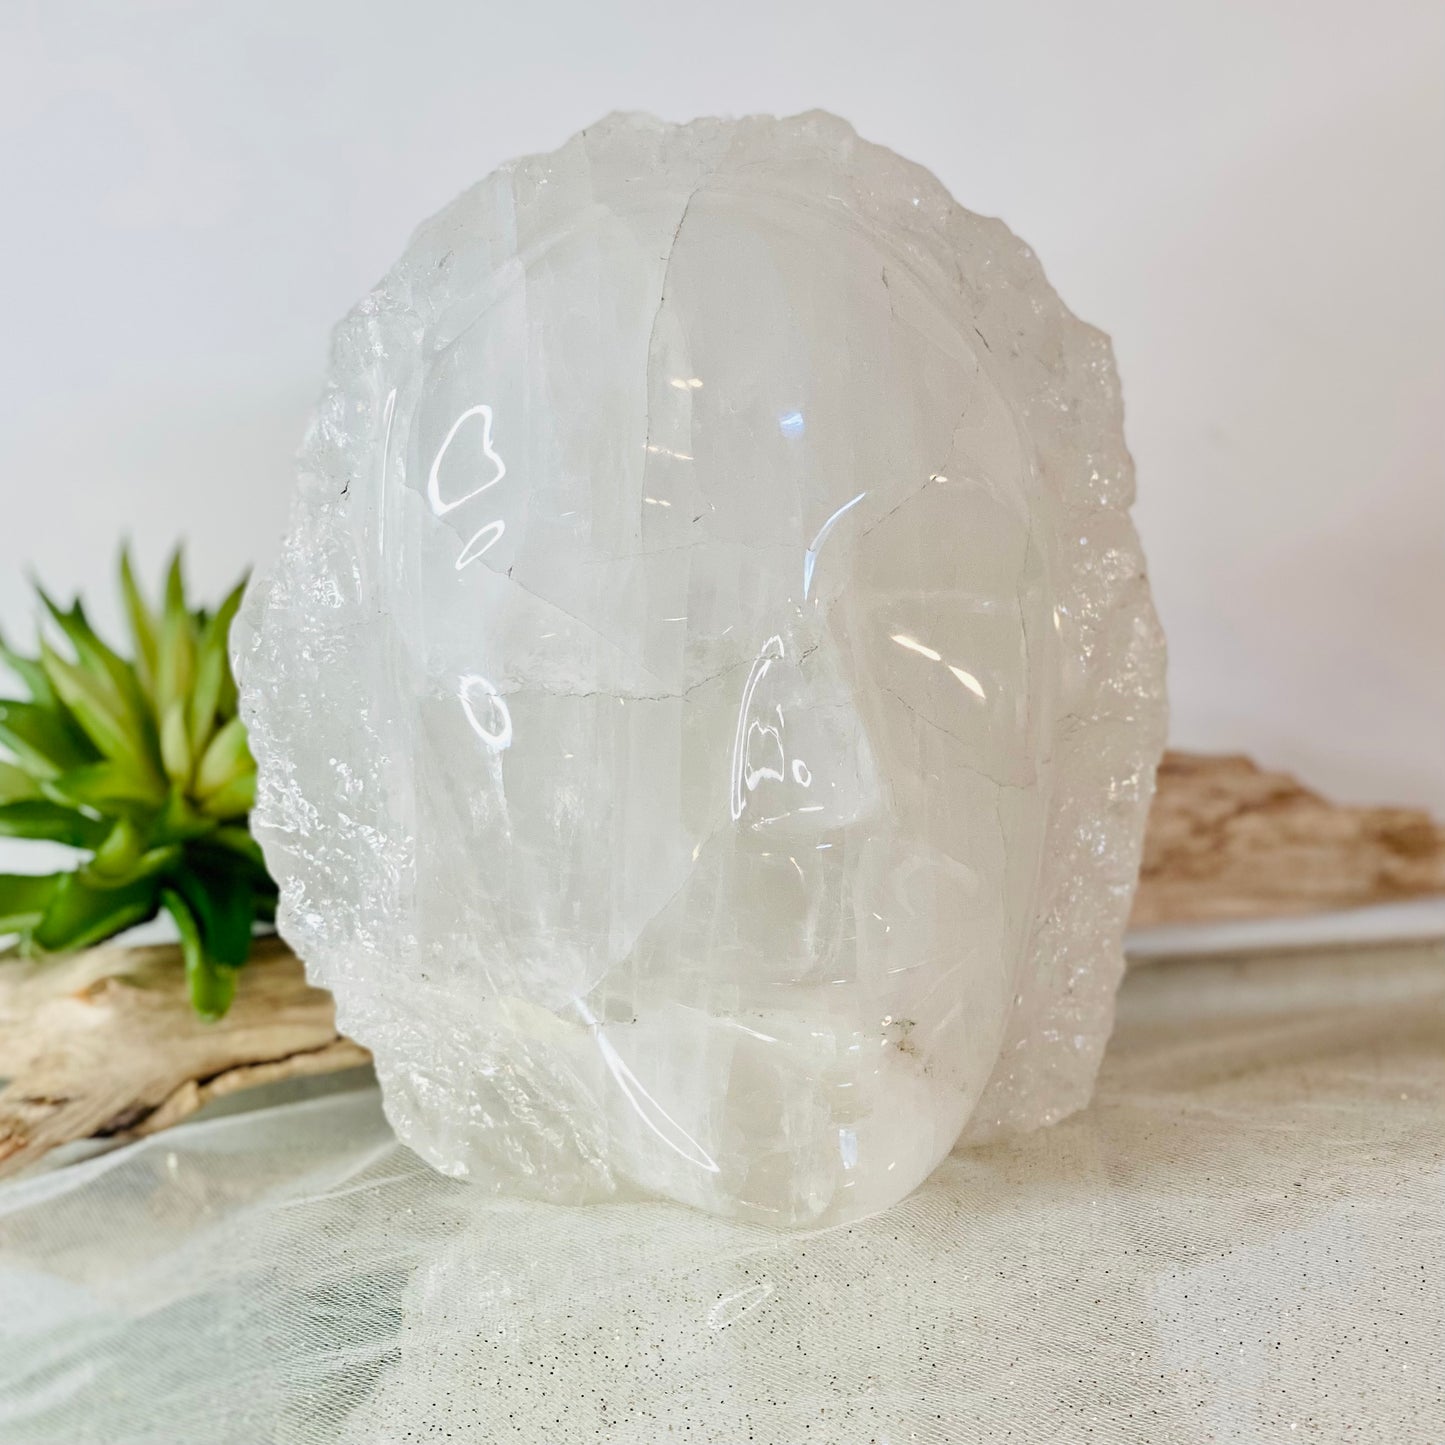 Quartz Crystal Face - CrystalsbytheSeaLLC